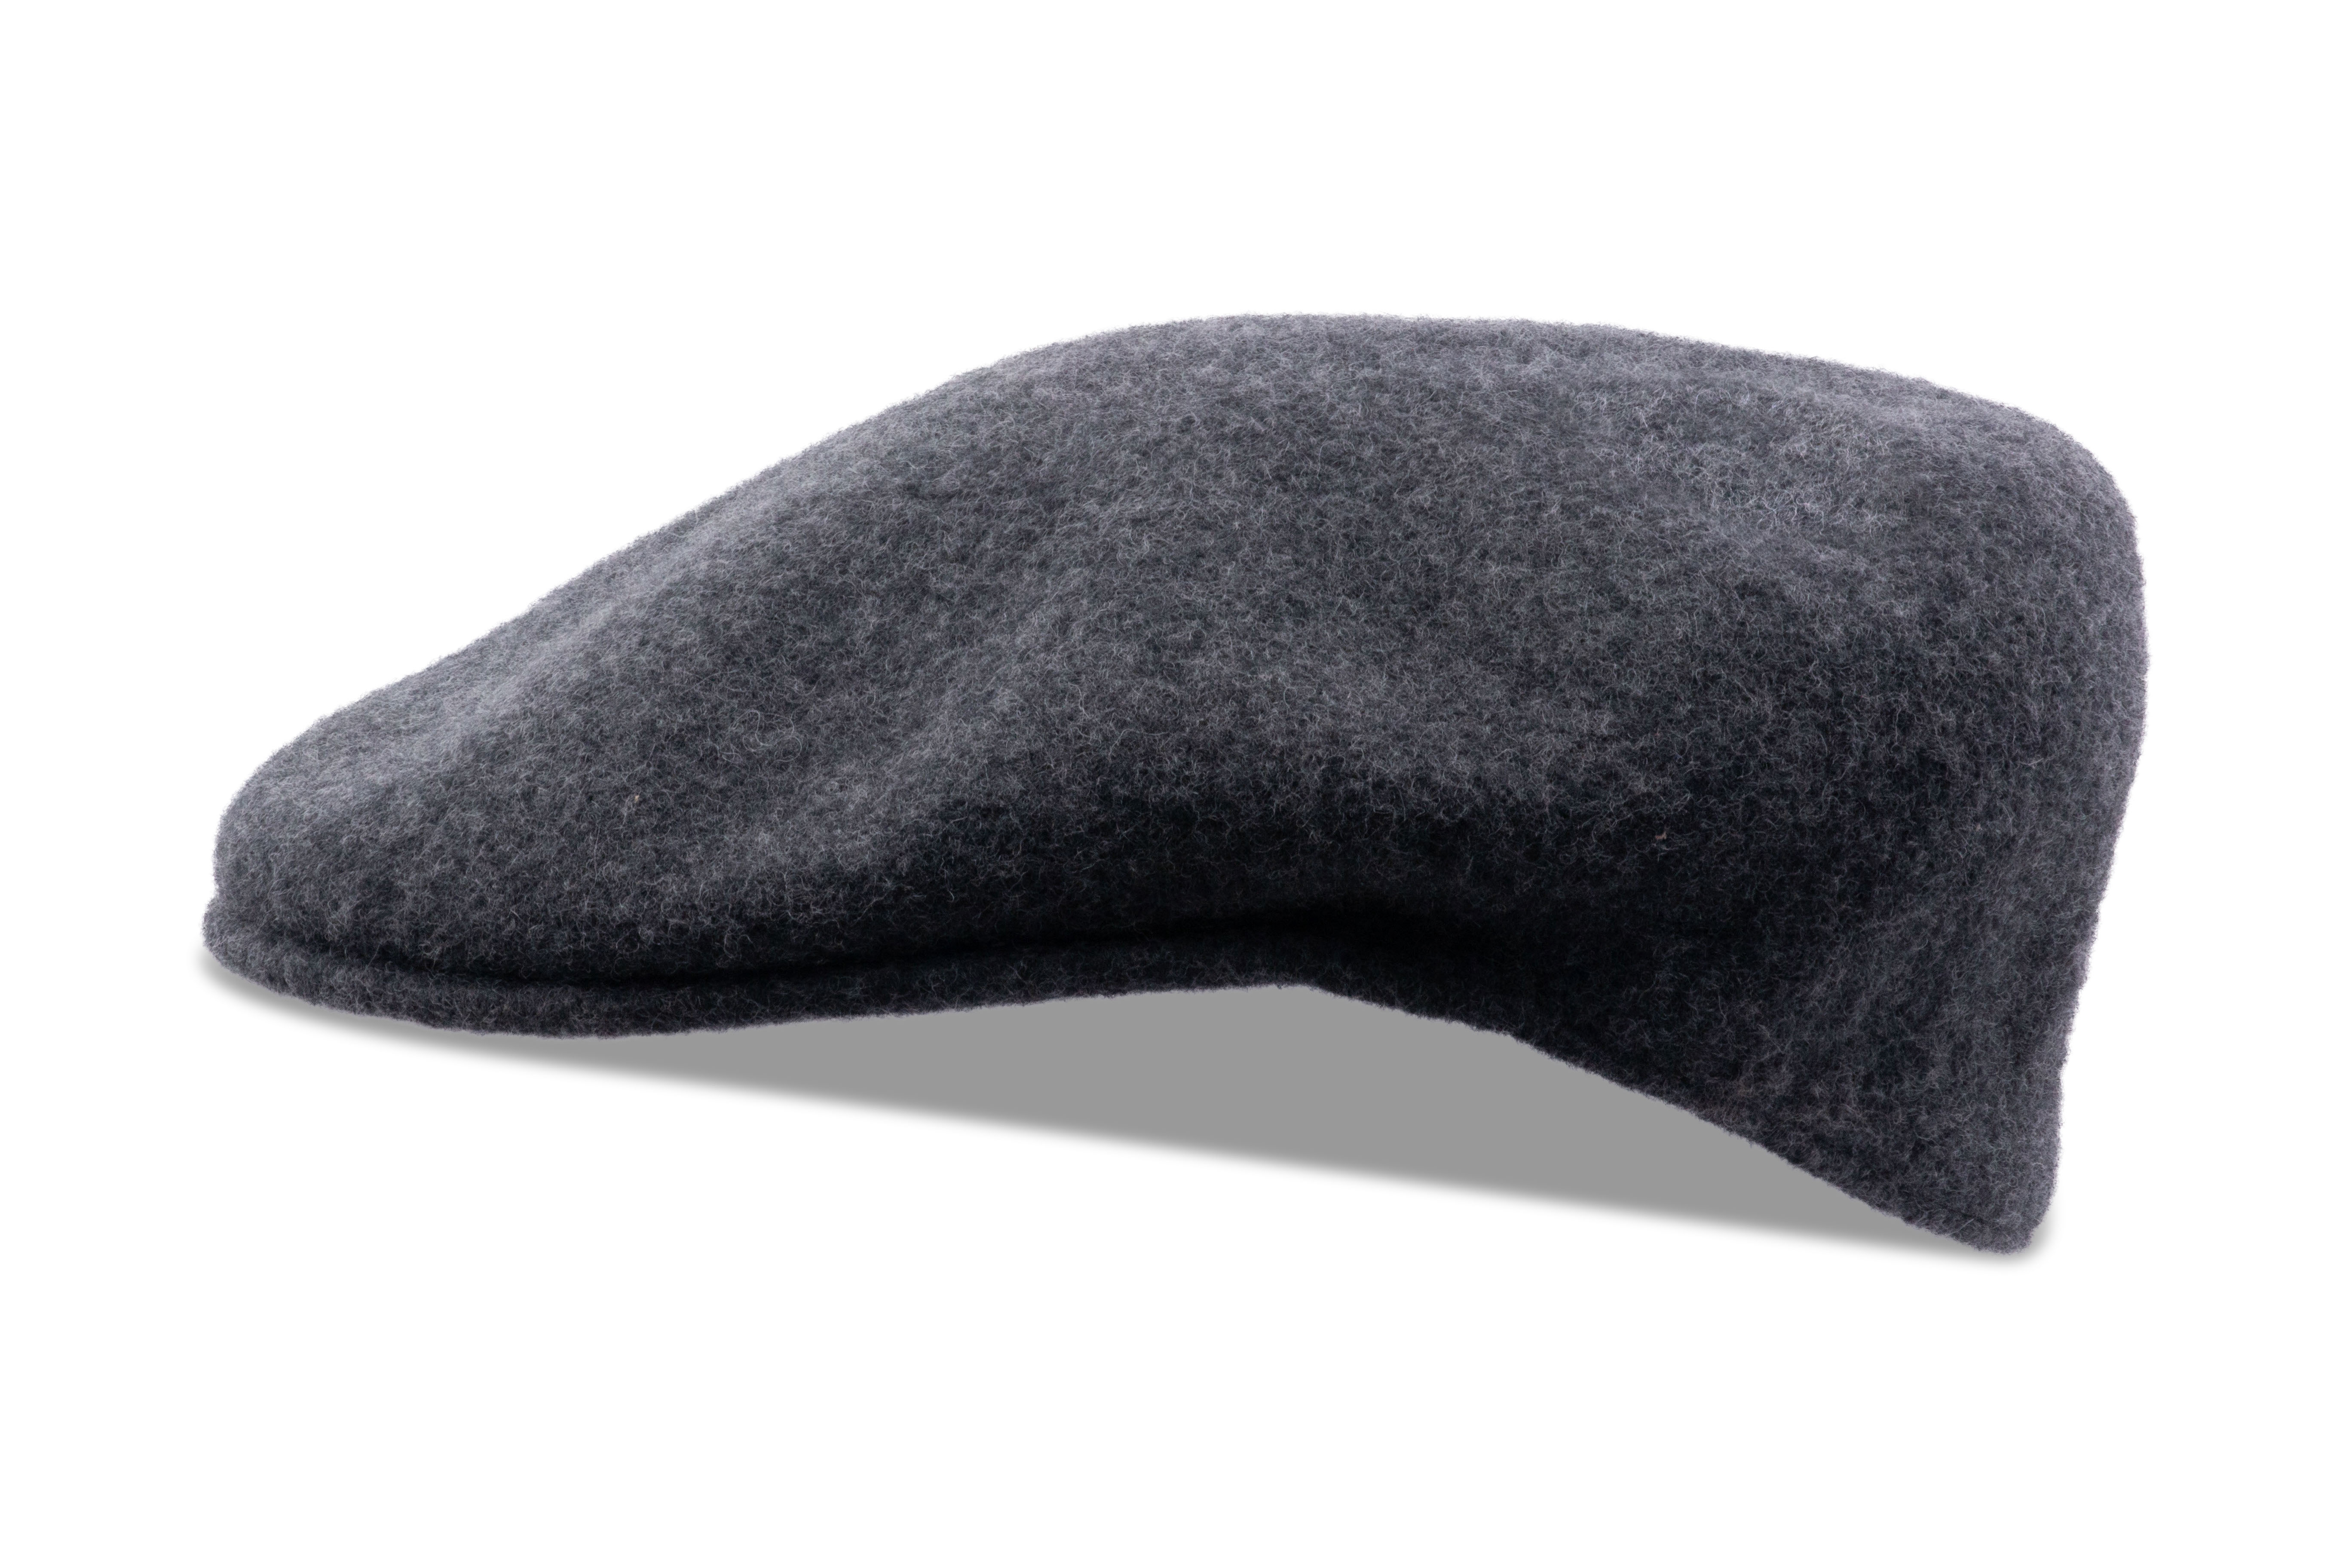 Kangol 504 Wool Felt Hat for Men and Women - Dark Flannel - XL